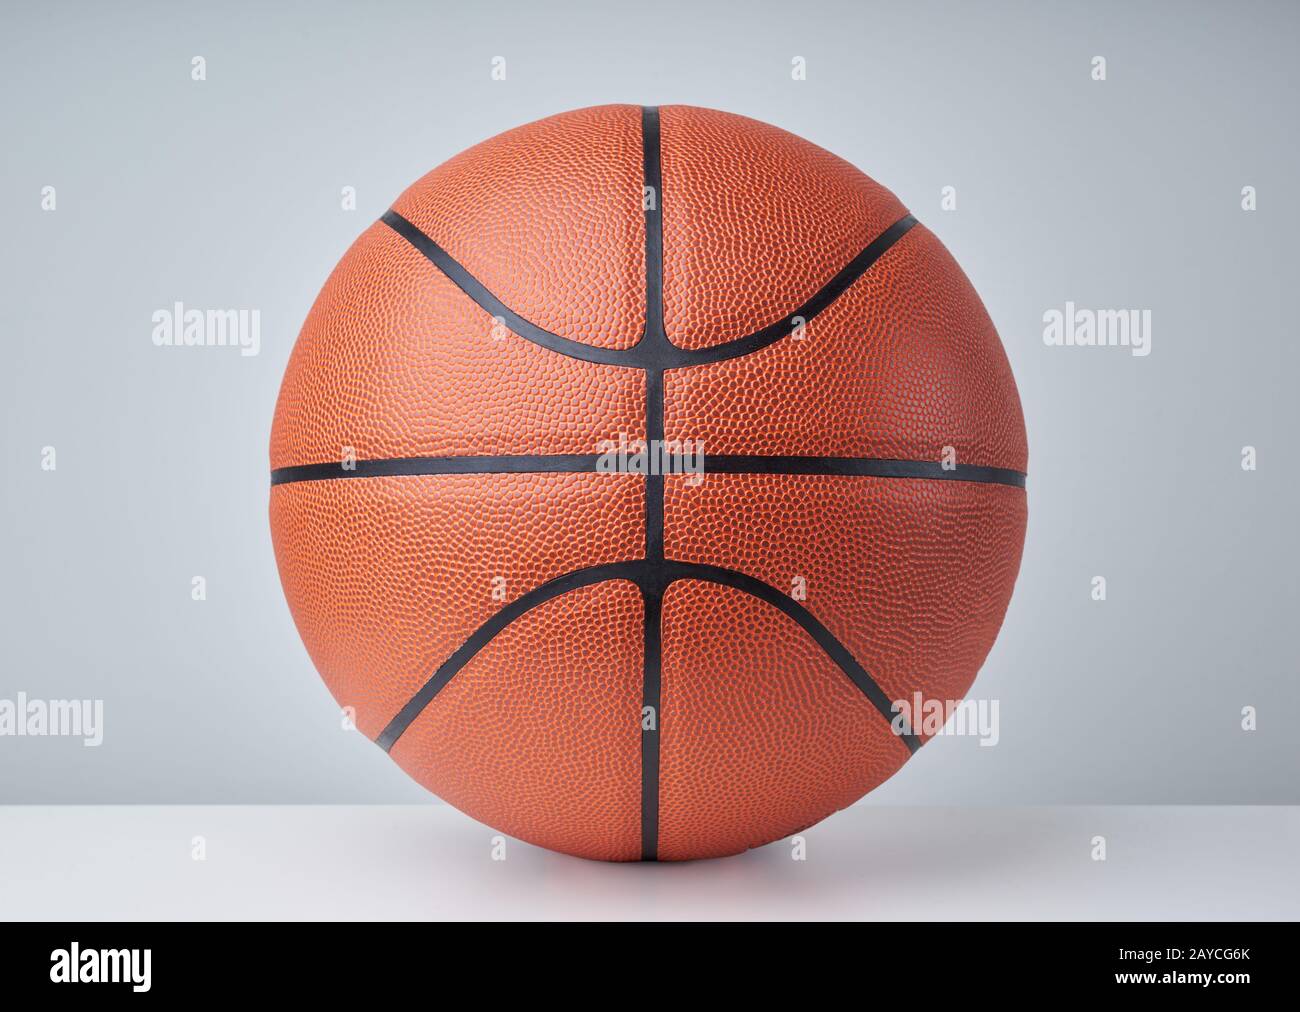 Basketball ball close up image on light grey background. Stock Photo